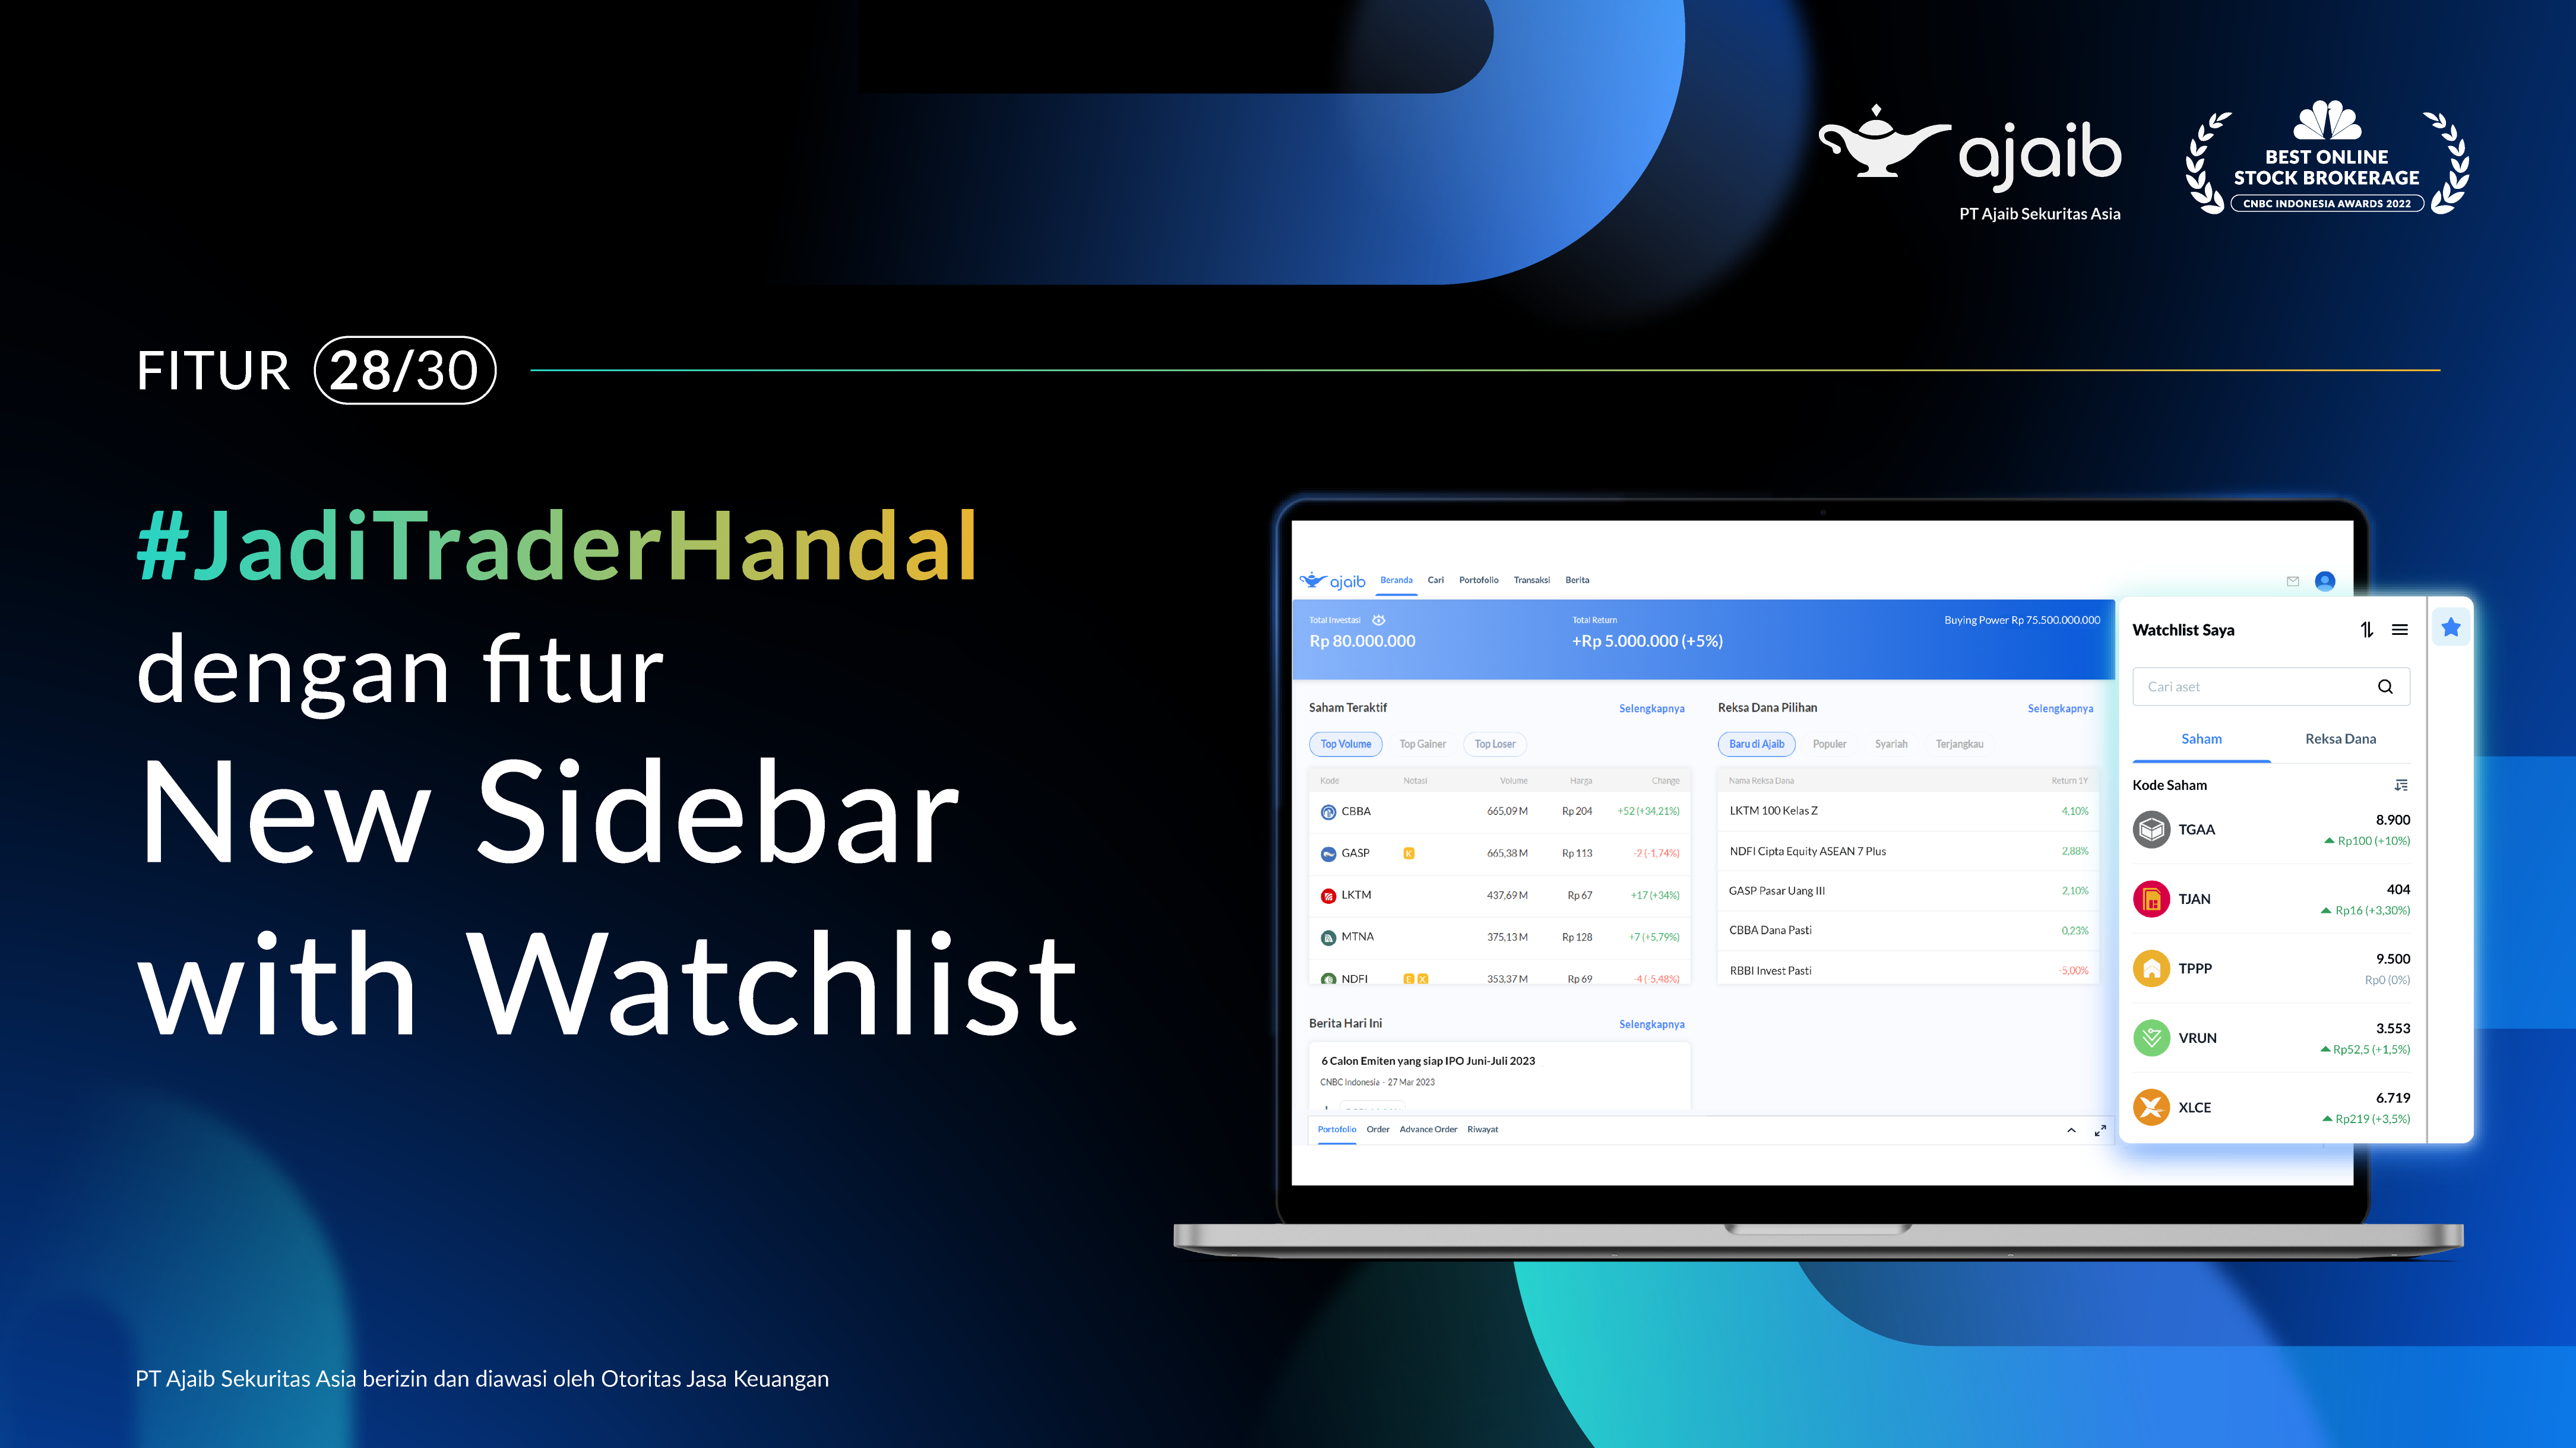 Fitur new sidebar with Watchlist